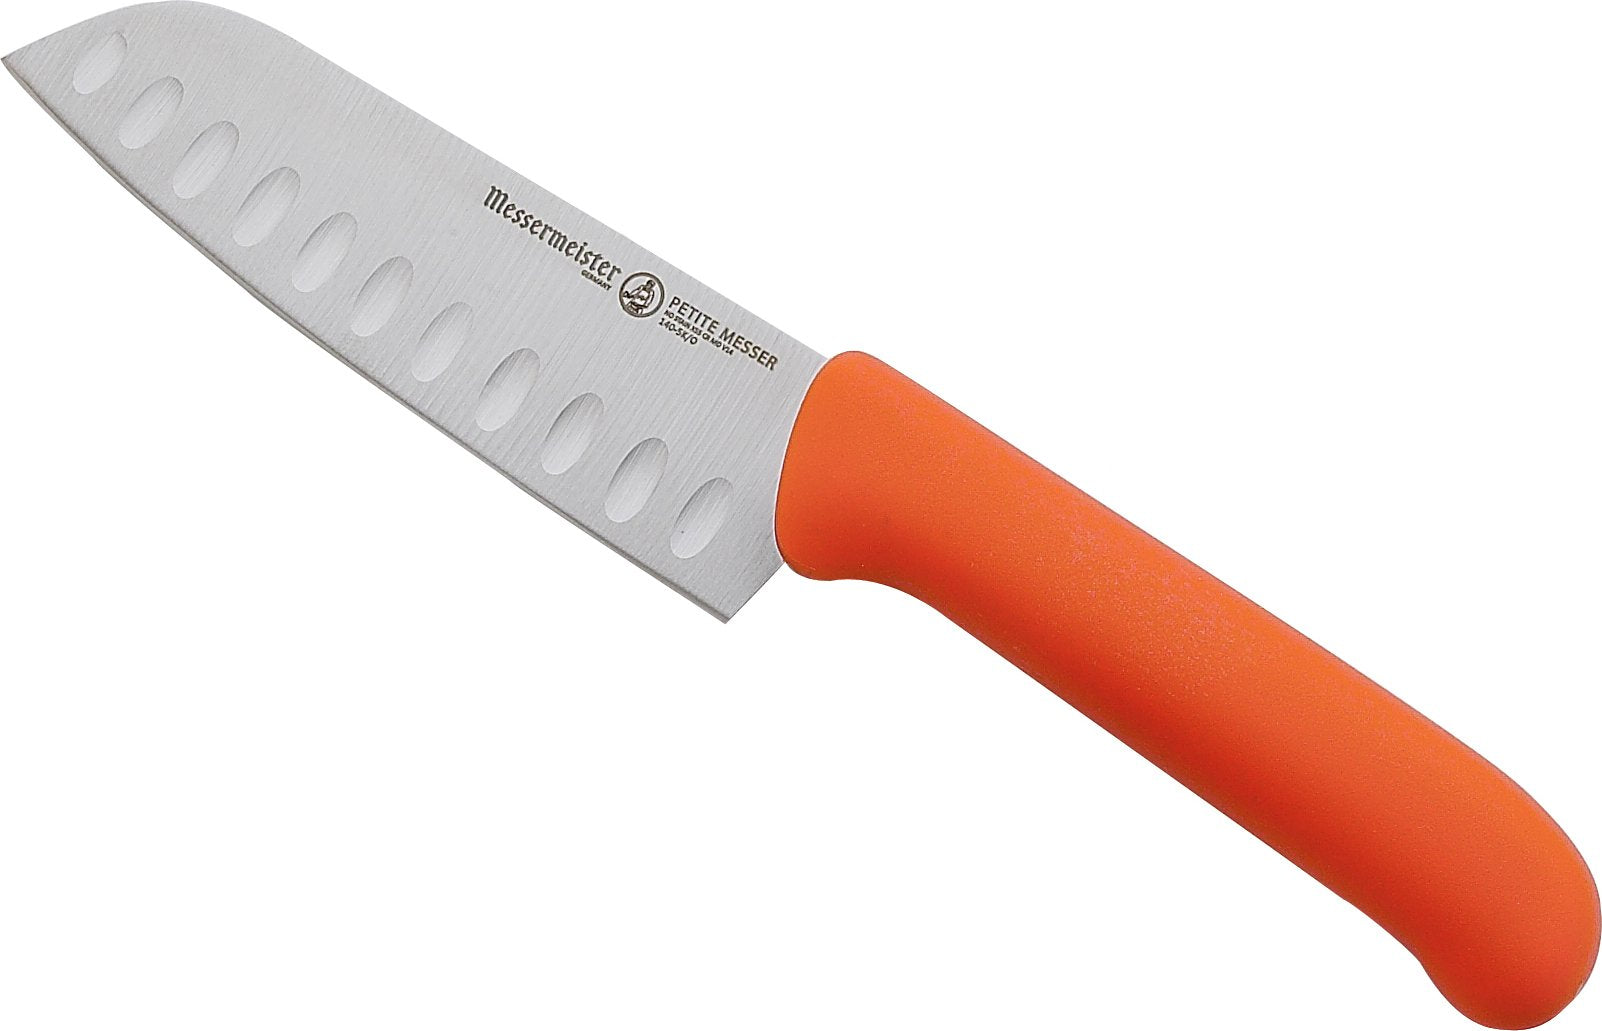 Messermeister - Orange Petite Messer 5" Kullenschliff Santoku Knife - 140-5K/O